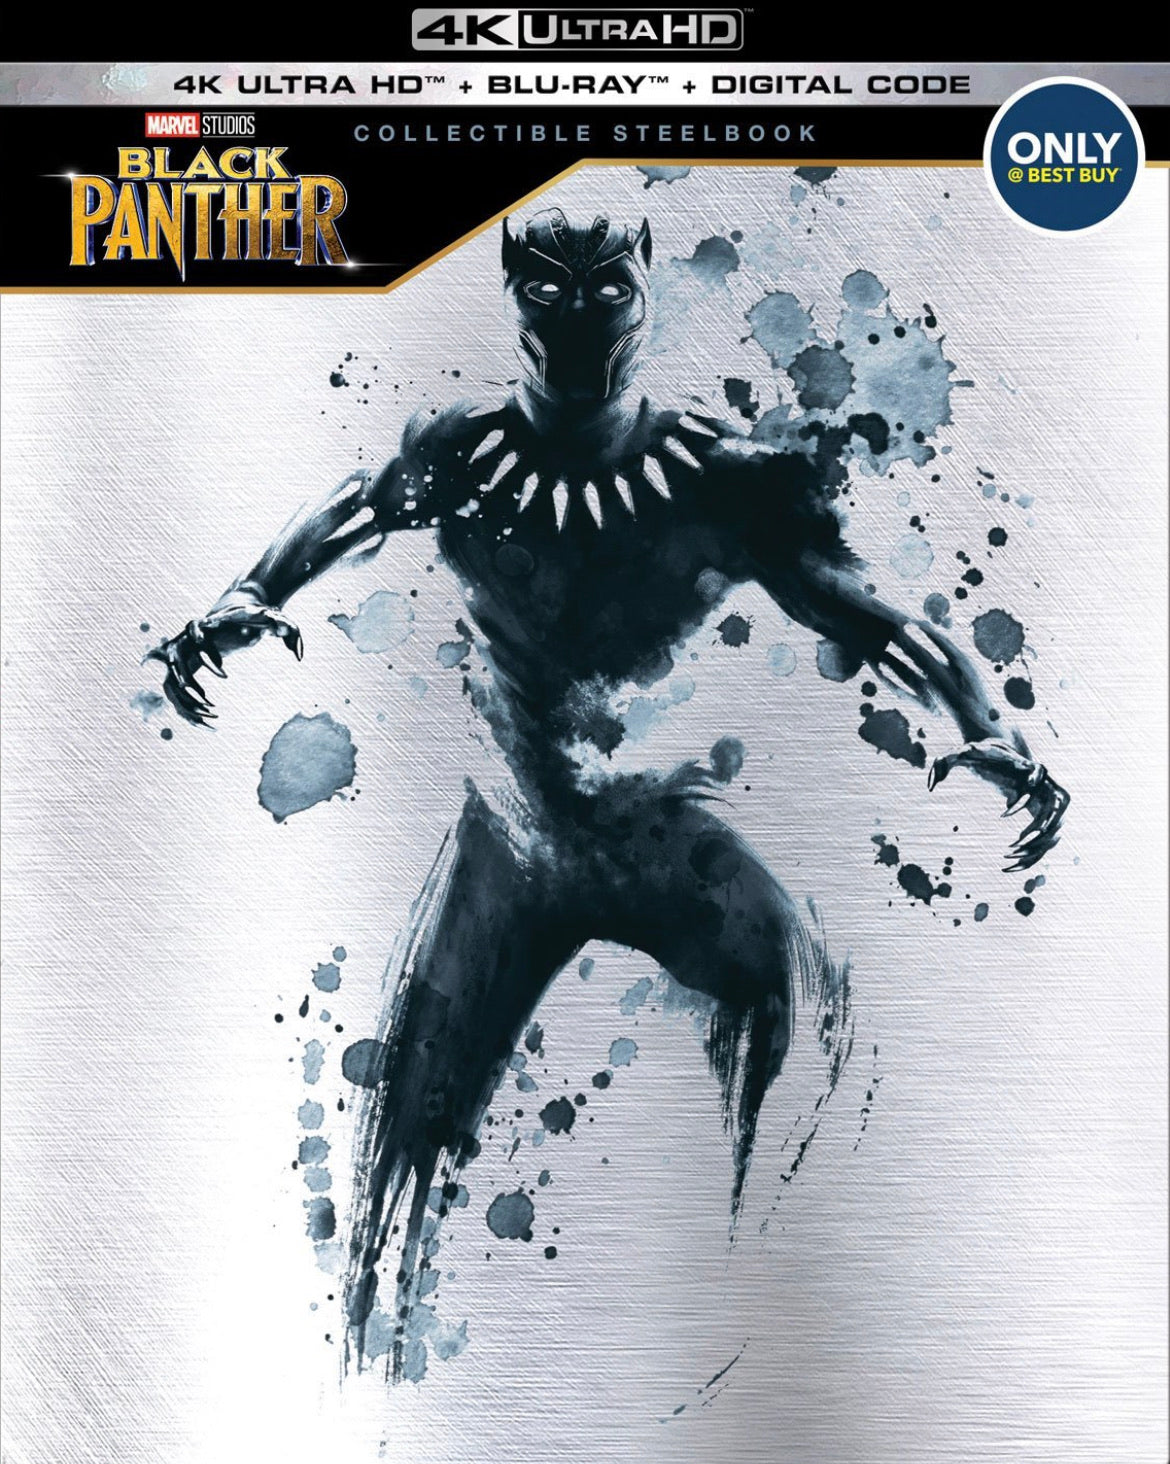 Black Panther (2018) Vudu or Movies Anywhere 4K code